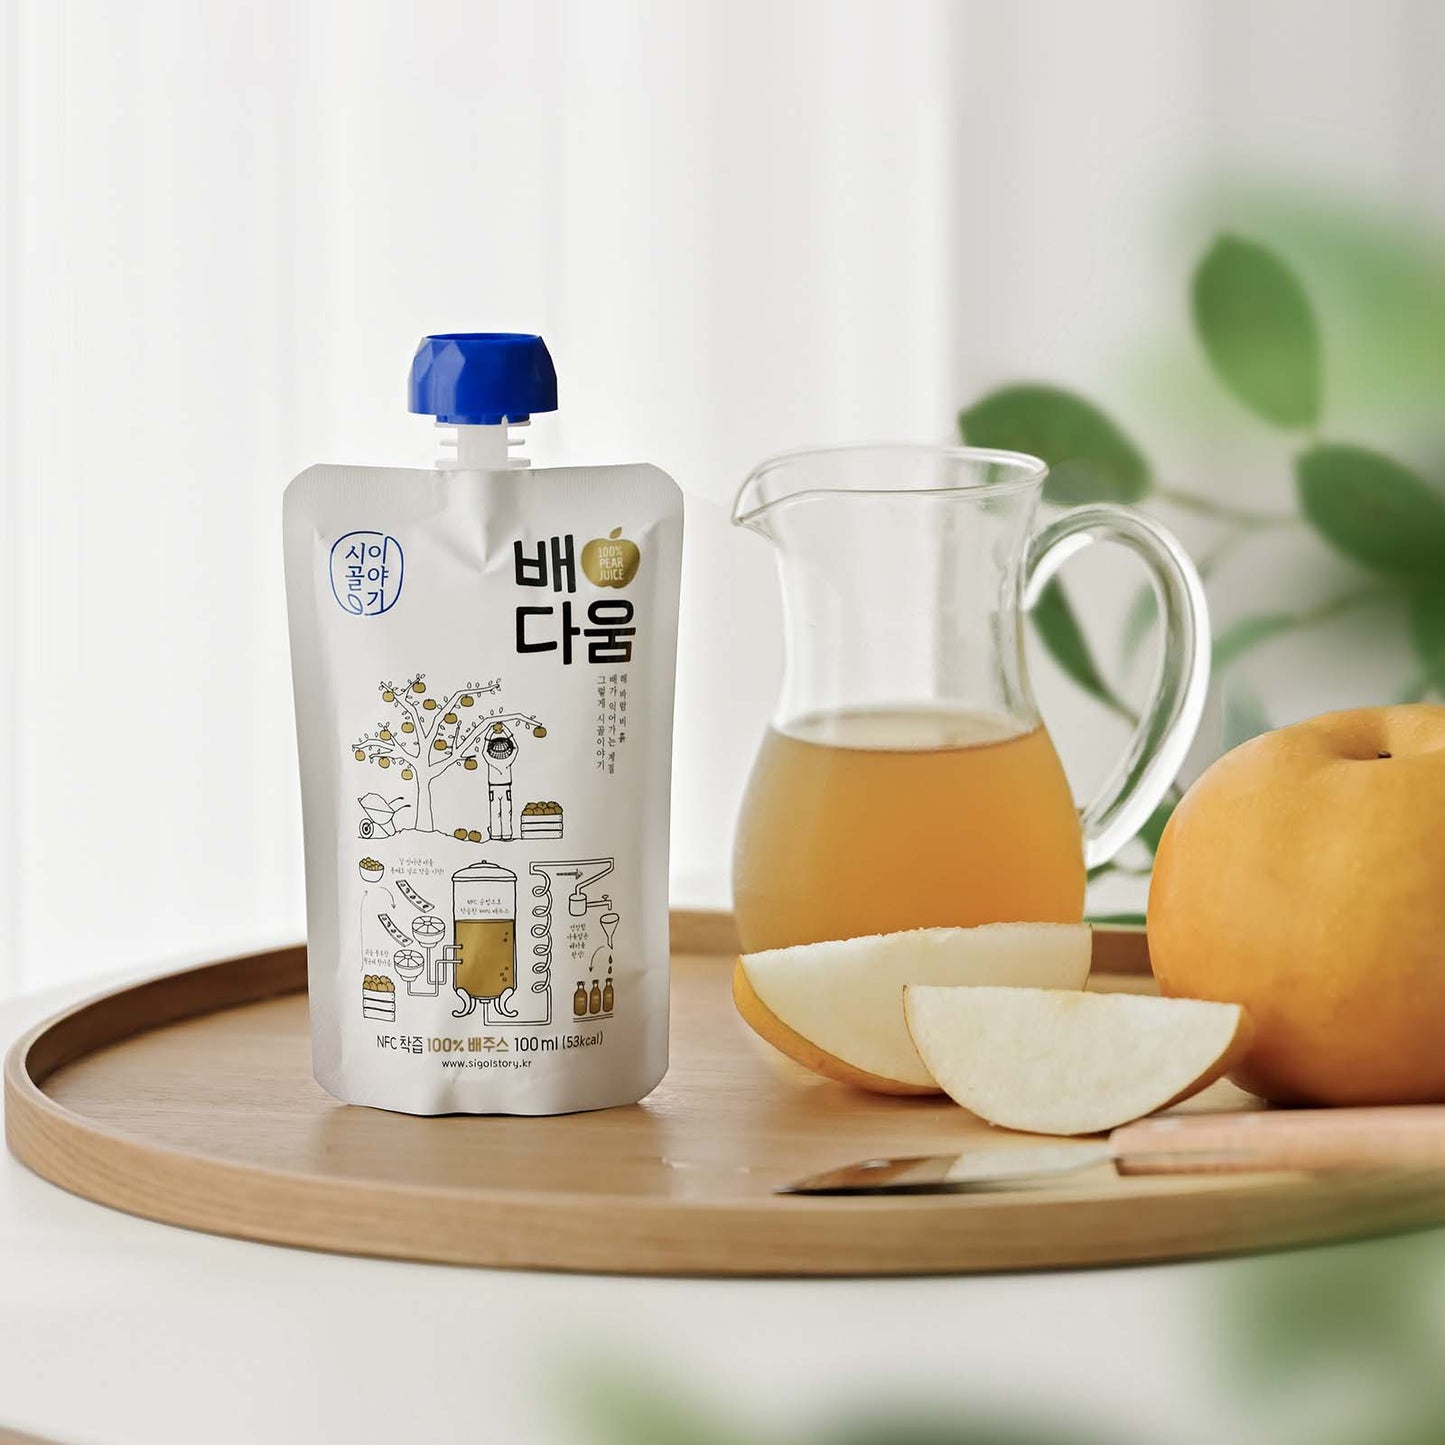 Sigolstory - 10-Pk NFC Korean Pear Juice 100ml